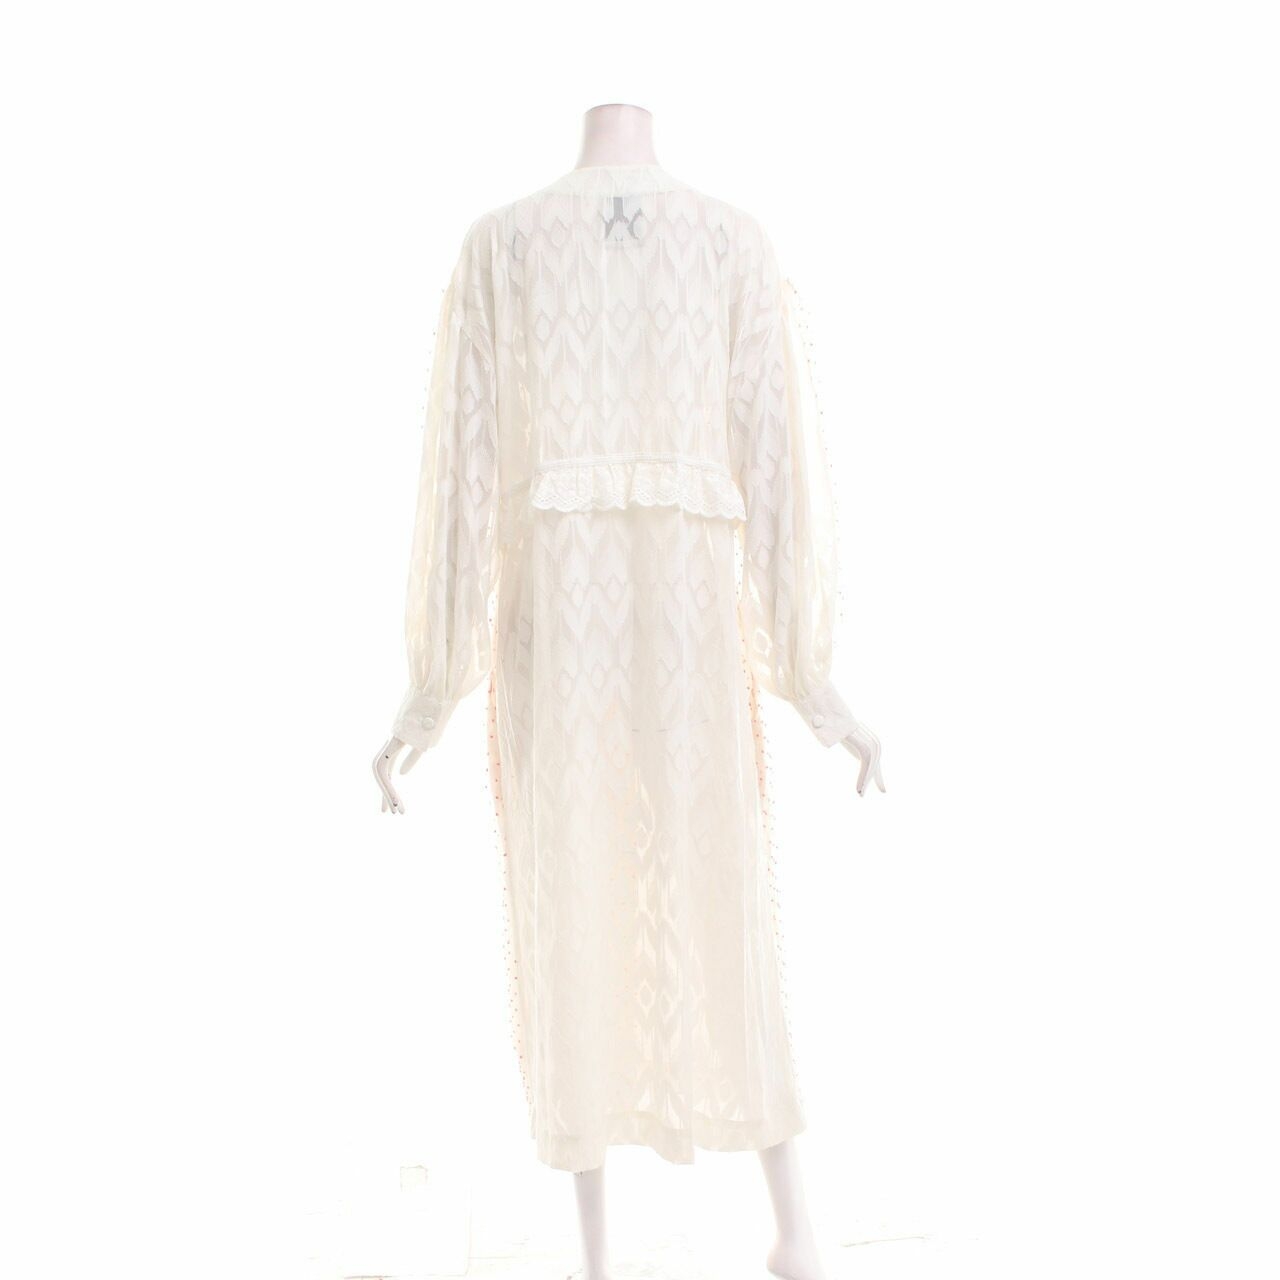 IKYK x Toton White Sheer Long Dress